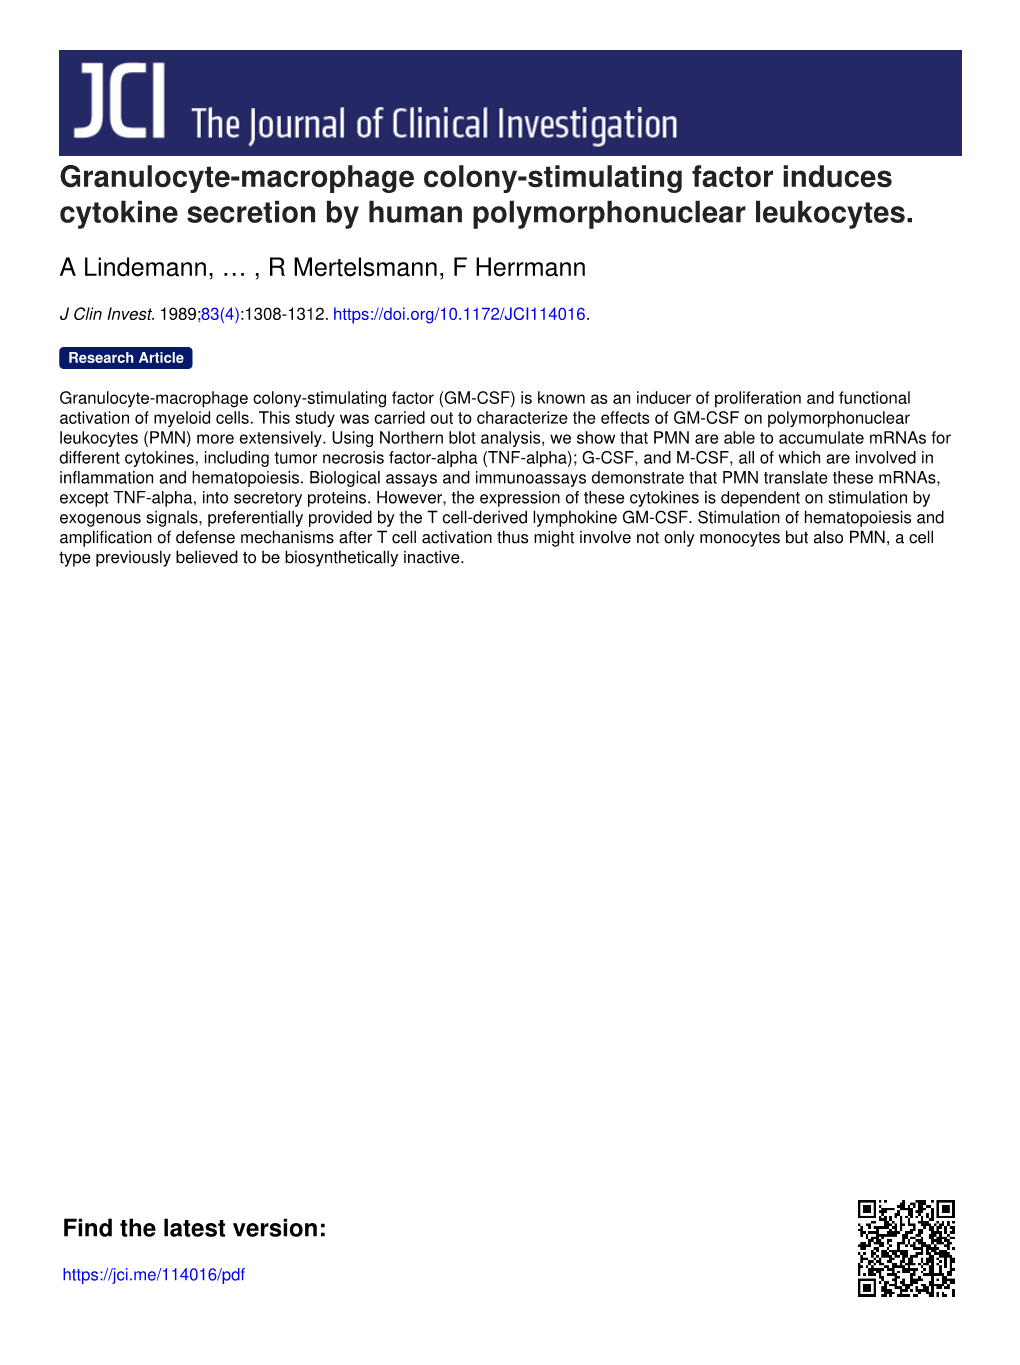 Granulocyte-Macrophage Colony-Stimulating Factor Induces Cytokine Secretion by Human Polymorphonuclear Leukocytes